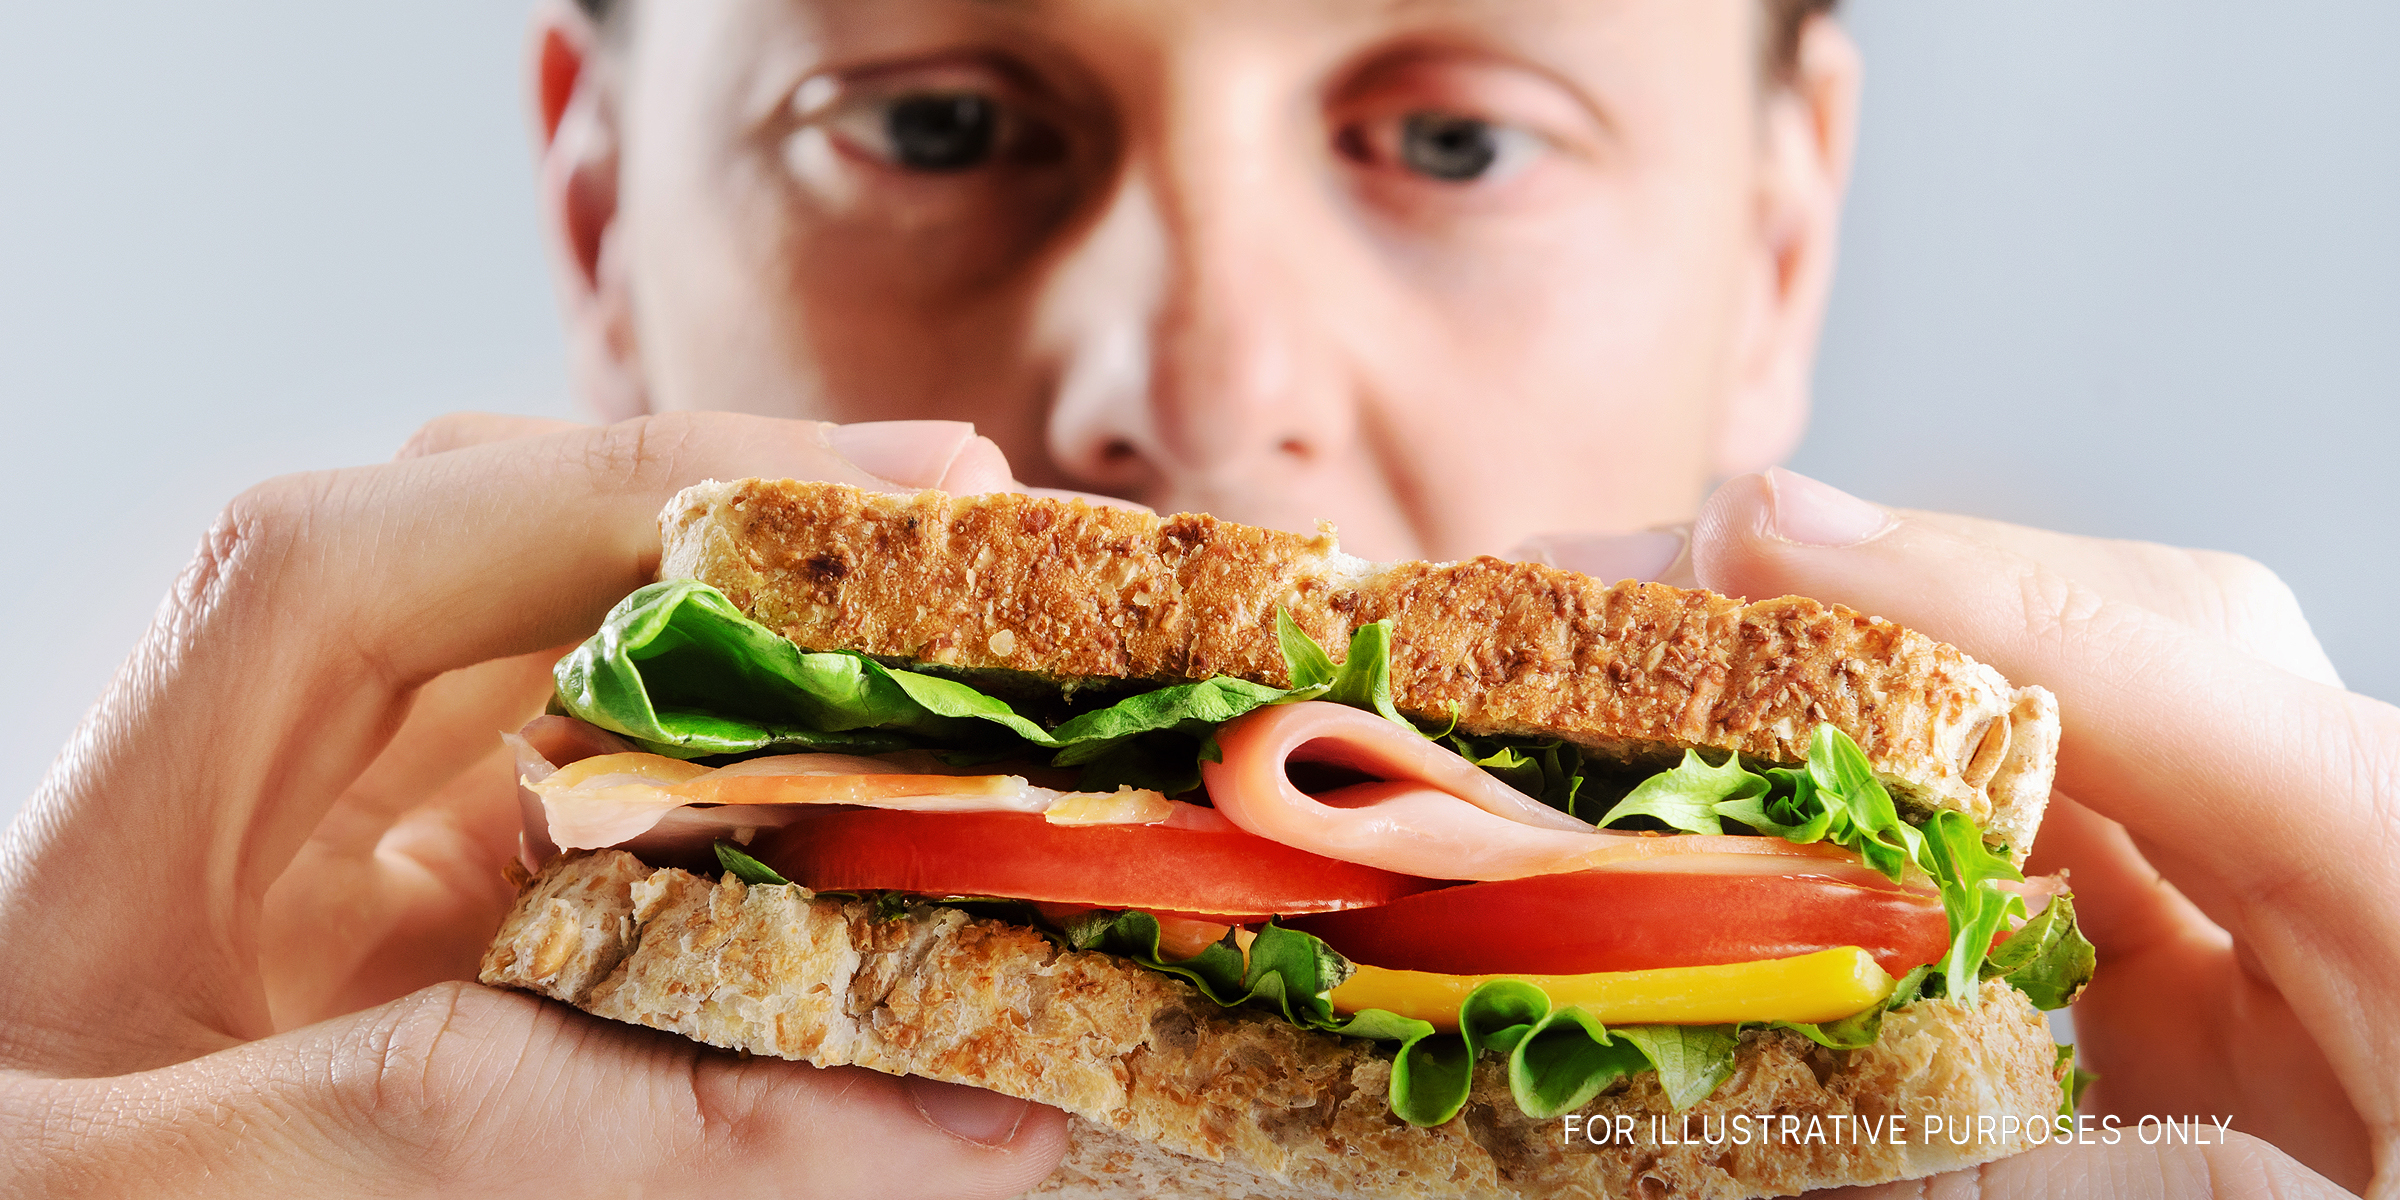 A man looking at a sandwich | Source: Shutterstock